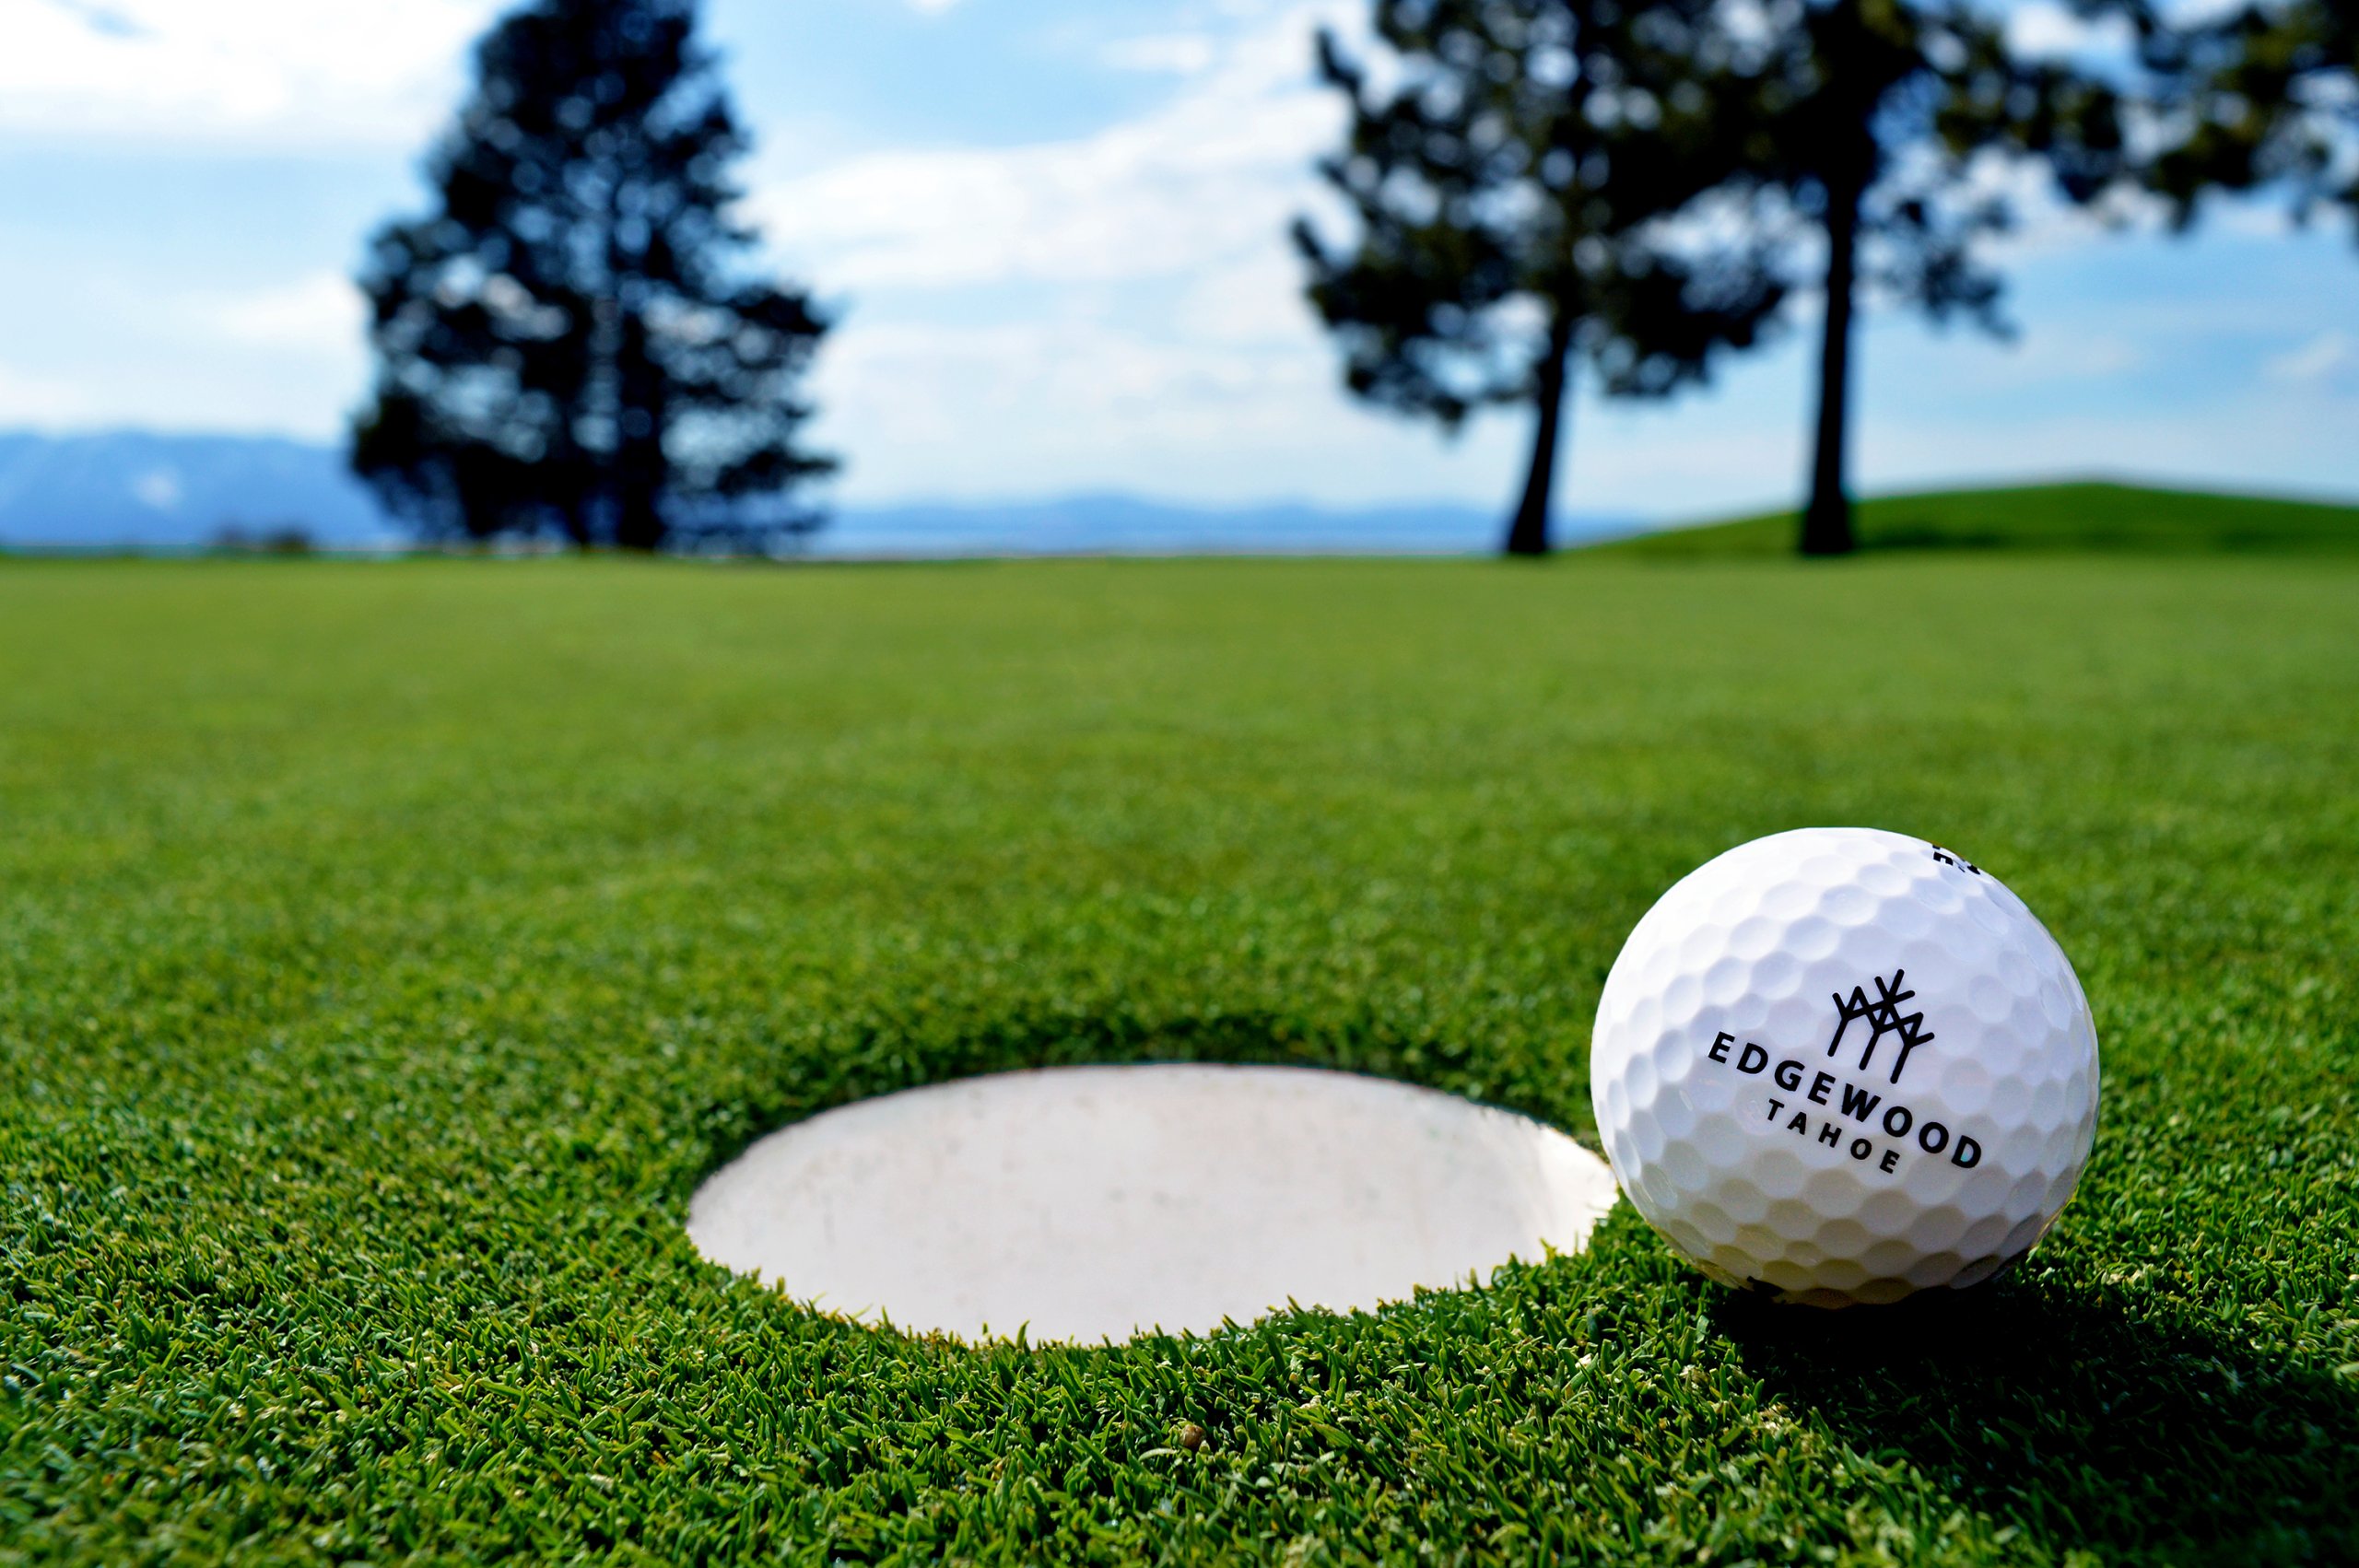 Golfing at Edgewood Tahoe resort